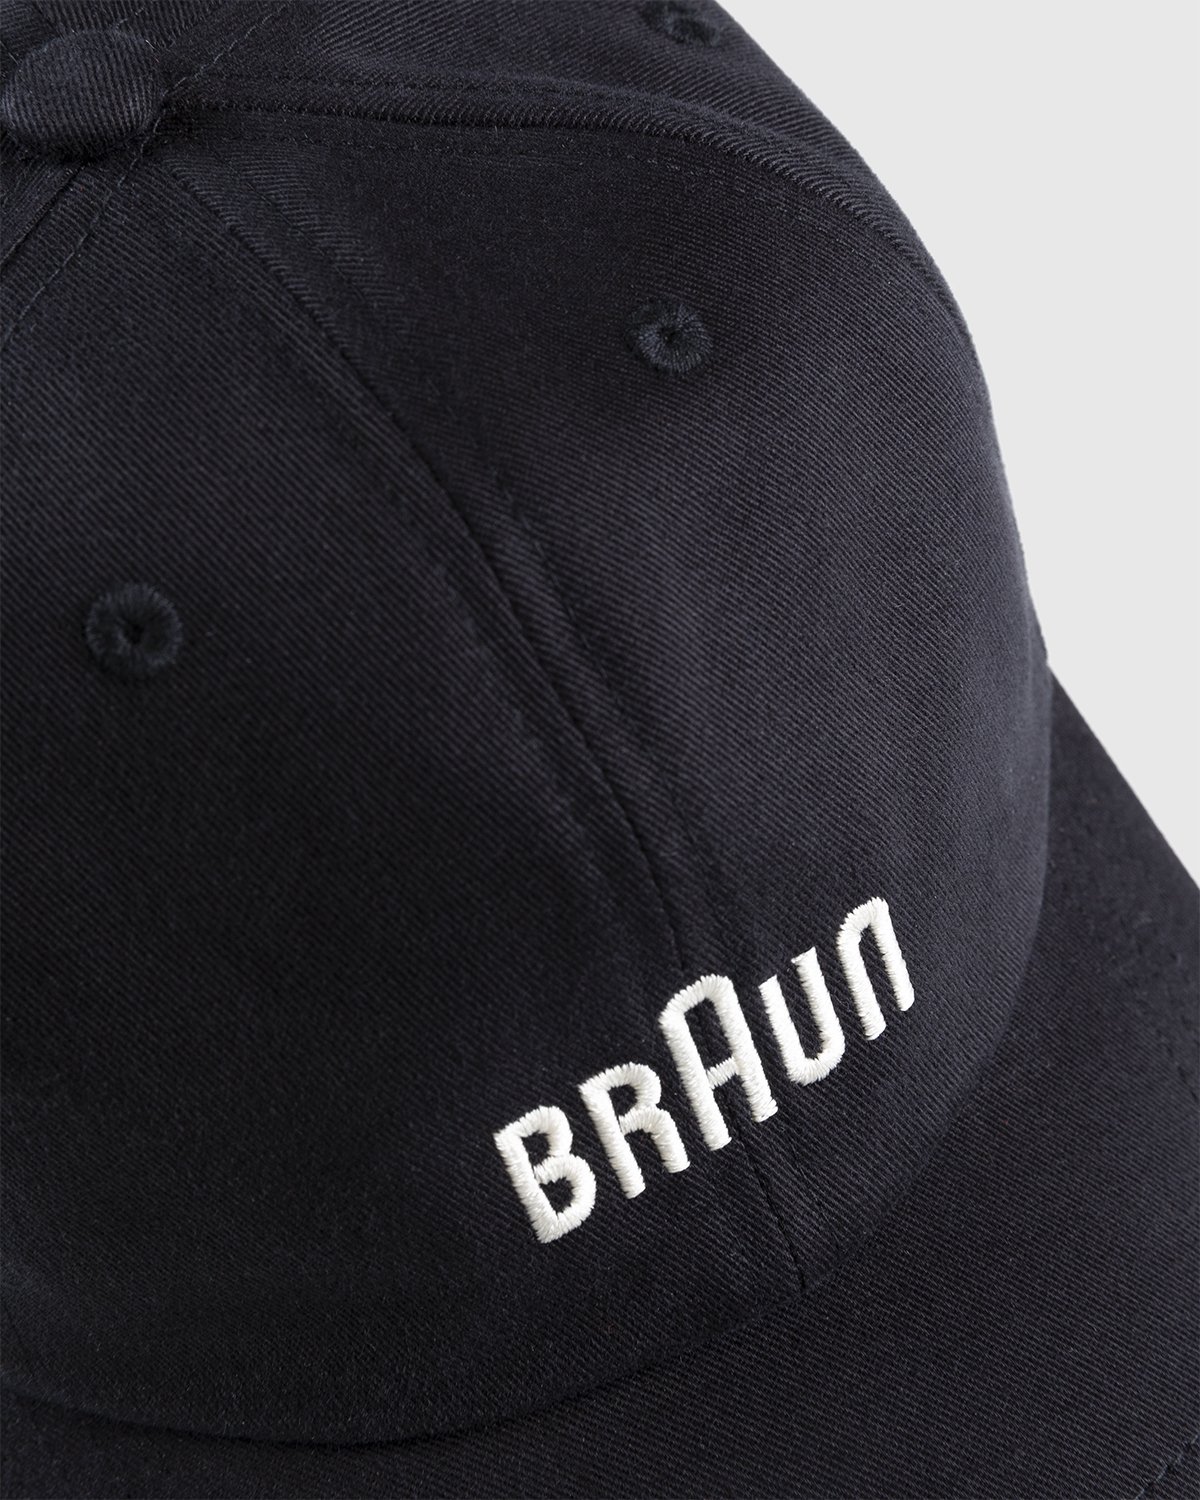 BRAUN x Highsnobiety - Logo Cap Black - Accessories - Black - Image 4